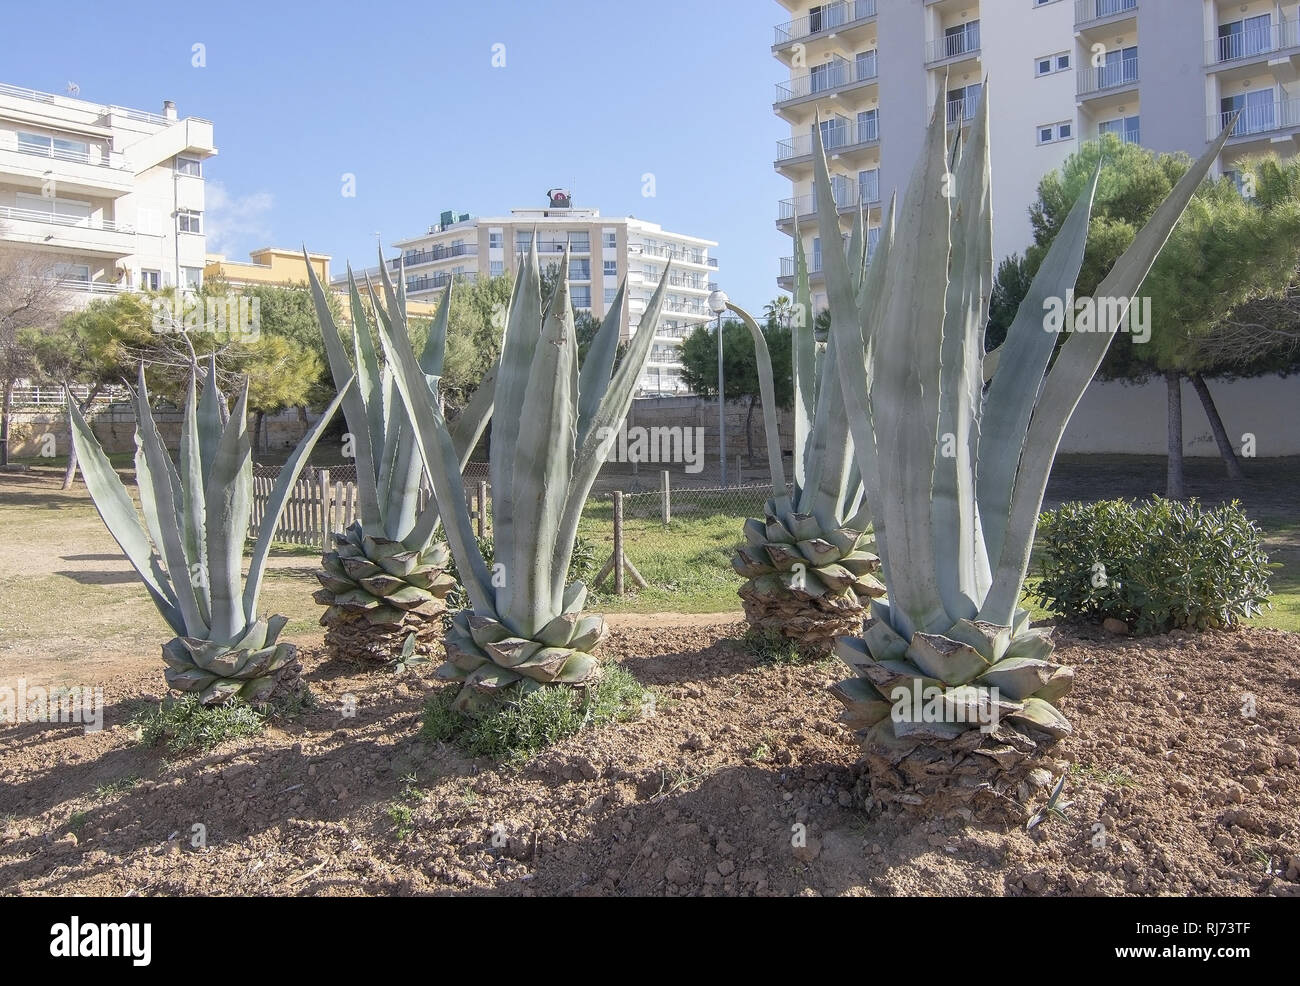 MALLORCA, SPAIN - FEBRUARY 4, 2019: Well kept aloe vera plants in a residential area outside Palma on February 4, 2019 in Mallorca, Spain. Stock Photo